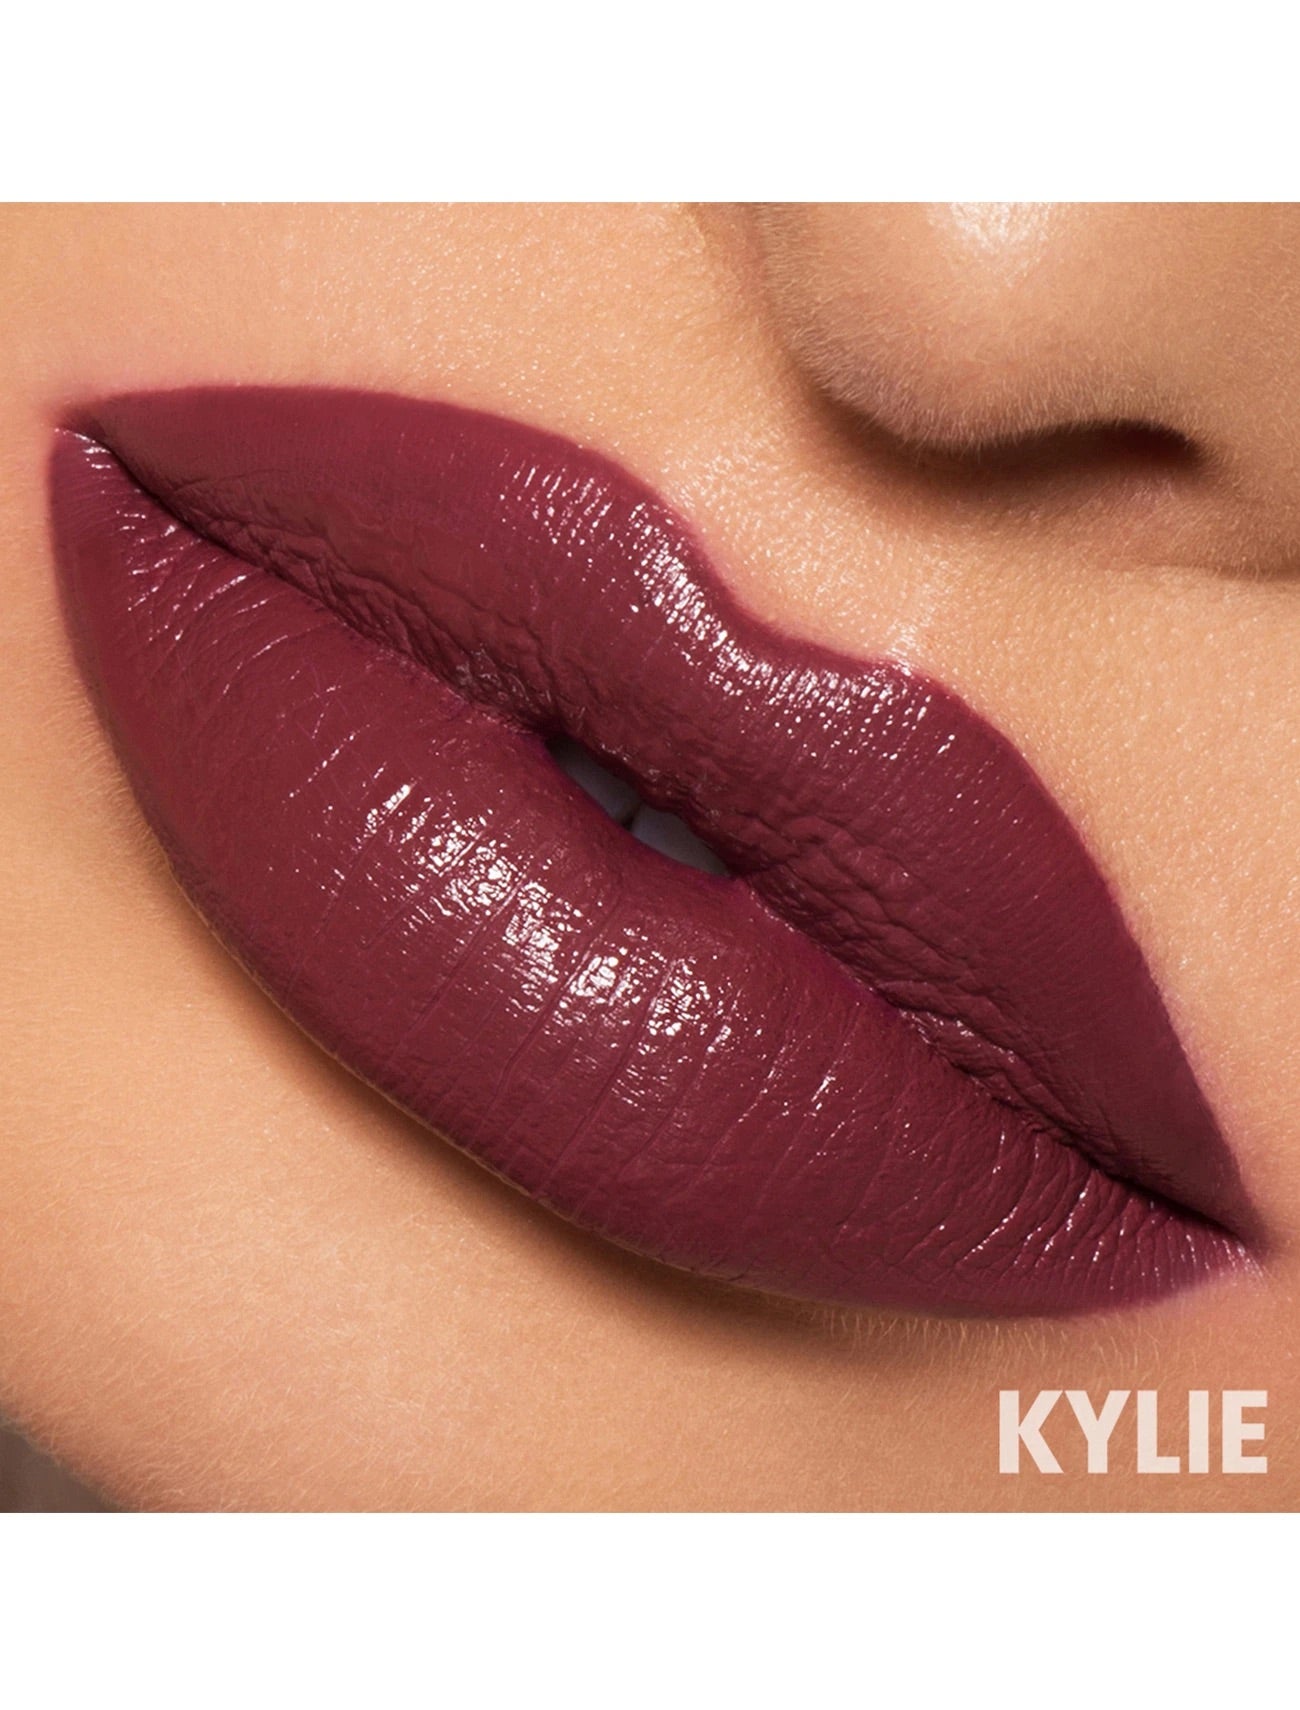 Brat | Velvet Liquid Lipstick Kylie Cosmetics